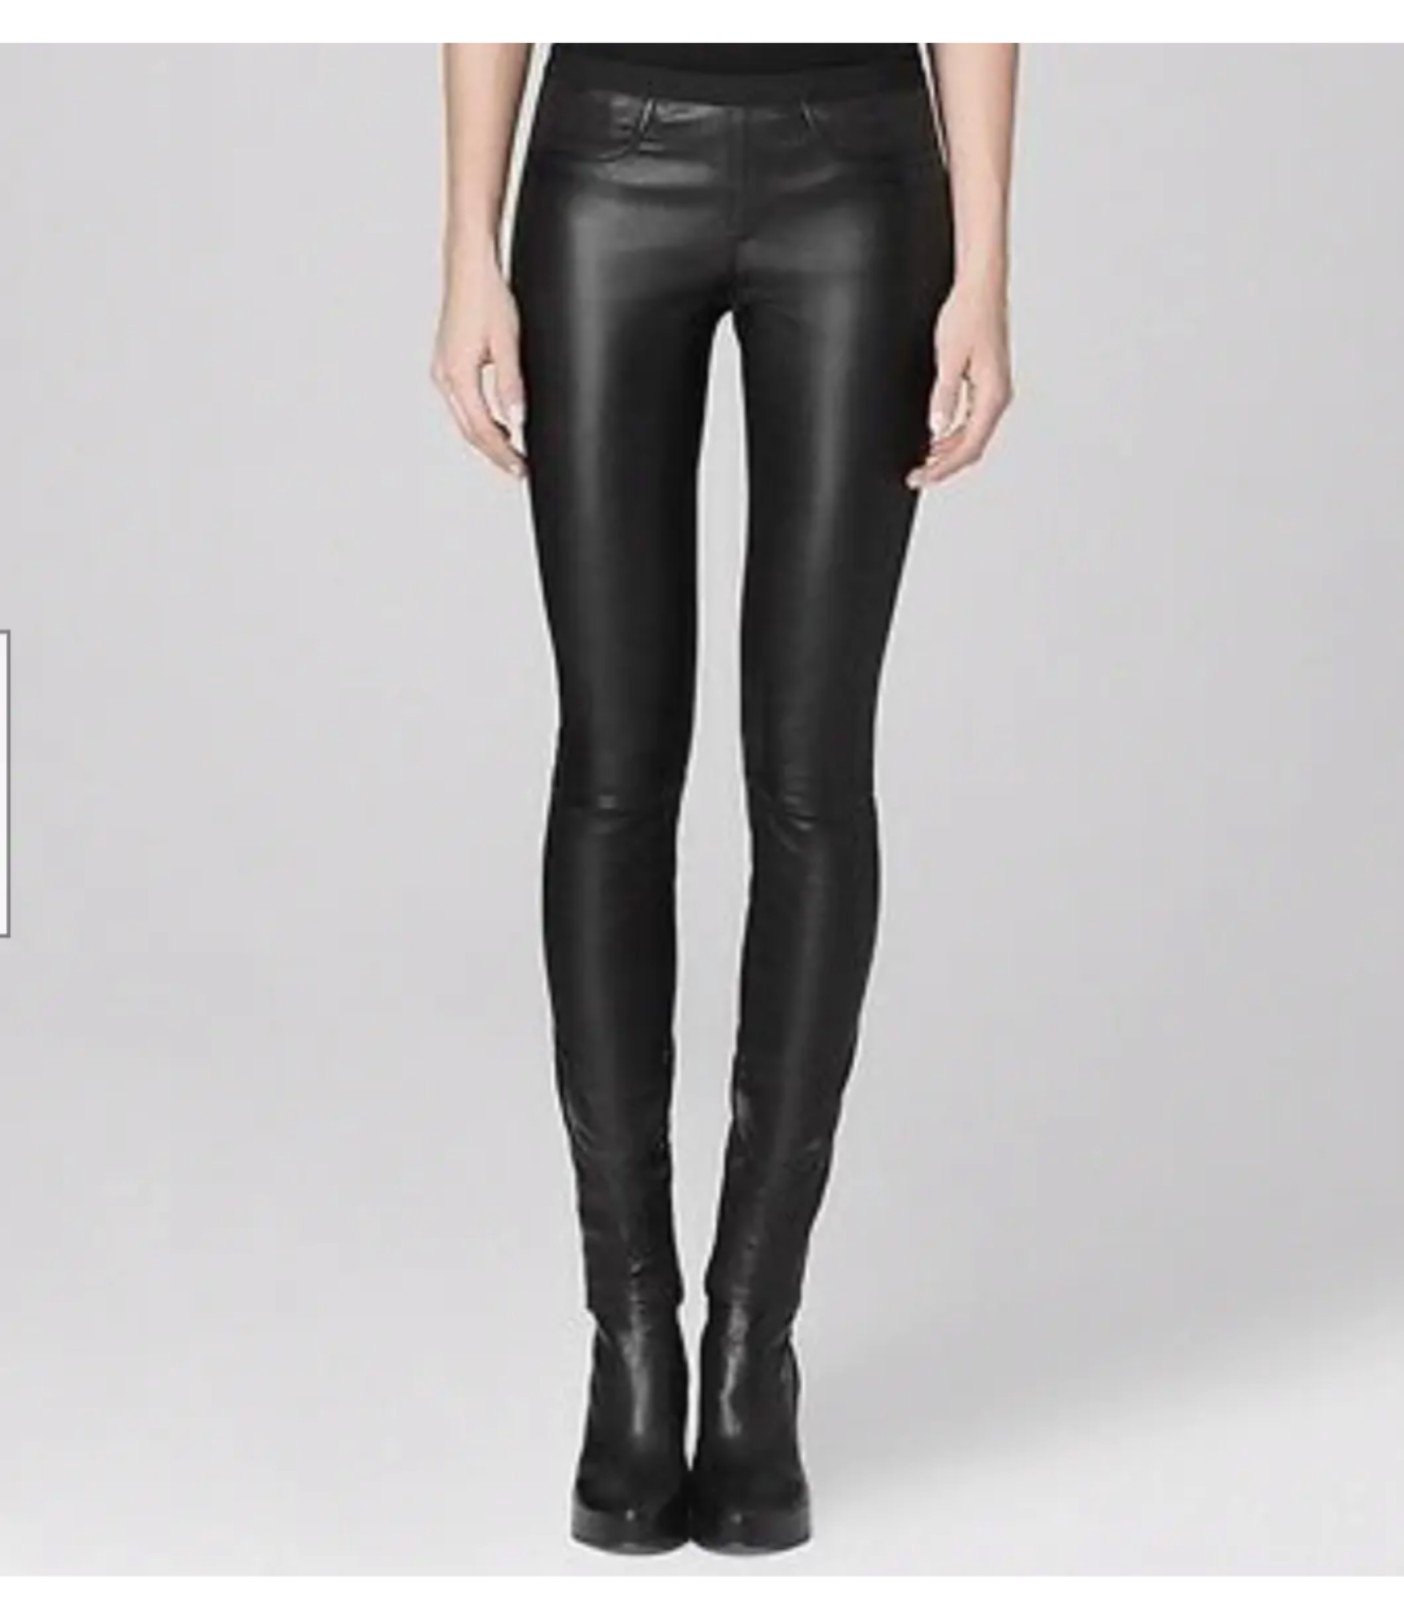 Cheap Helmut Lang Black 100% Leather Leggings Pants LTS